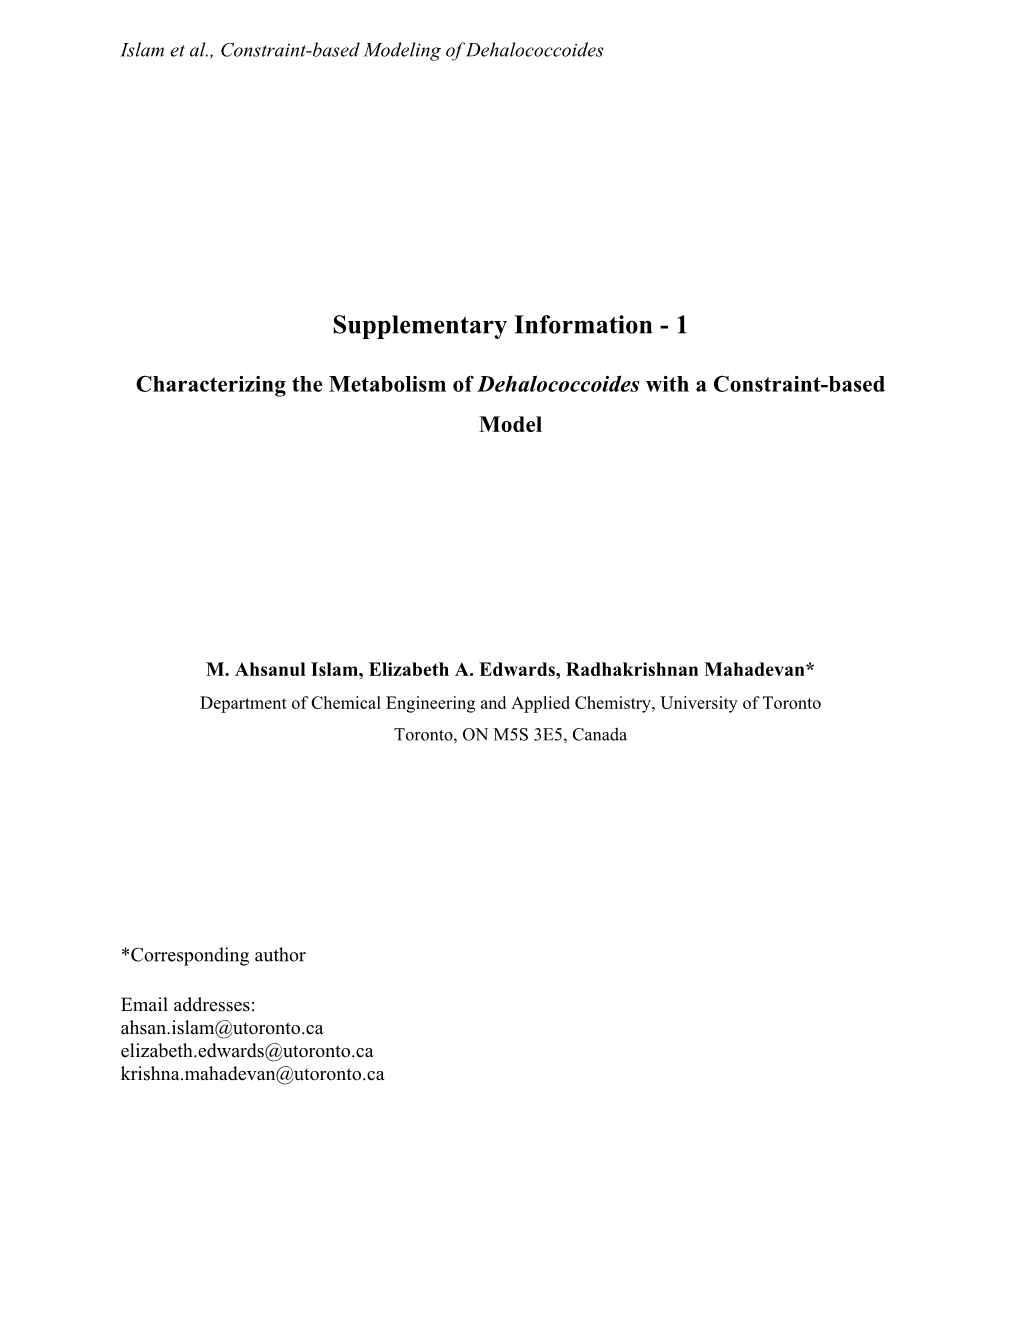 Supplementary Information - 1